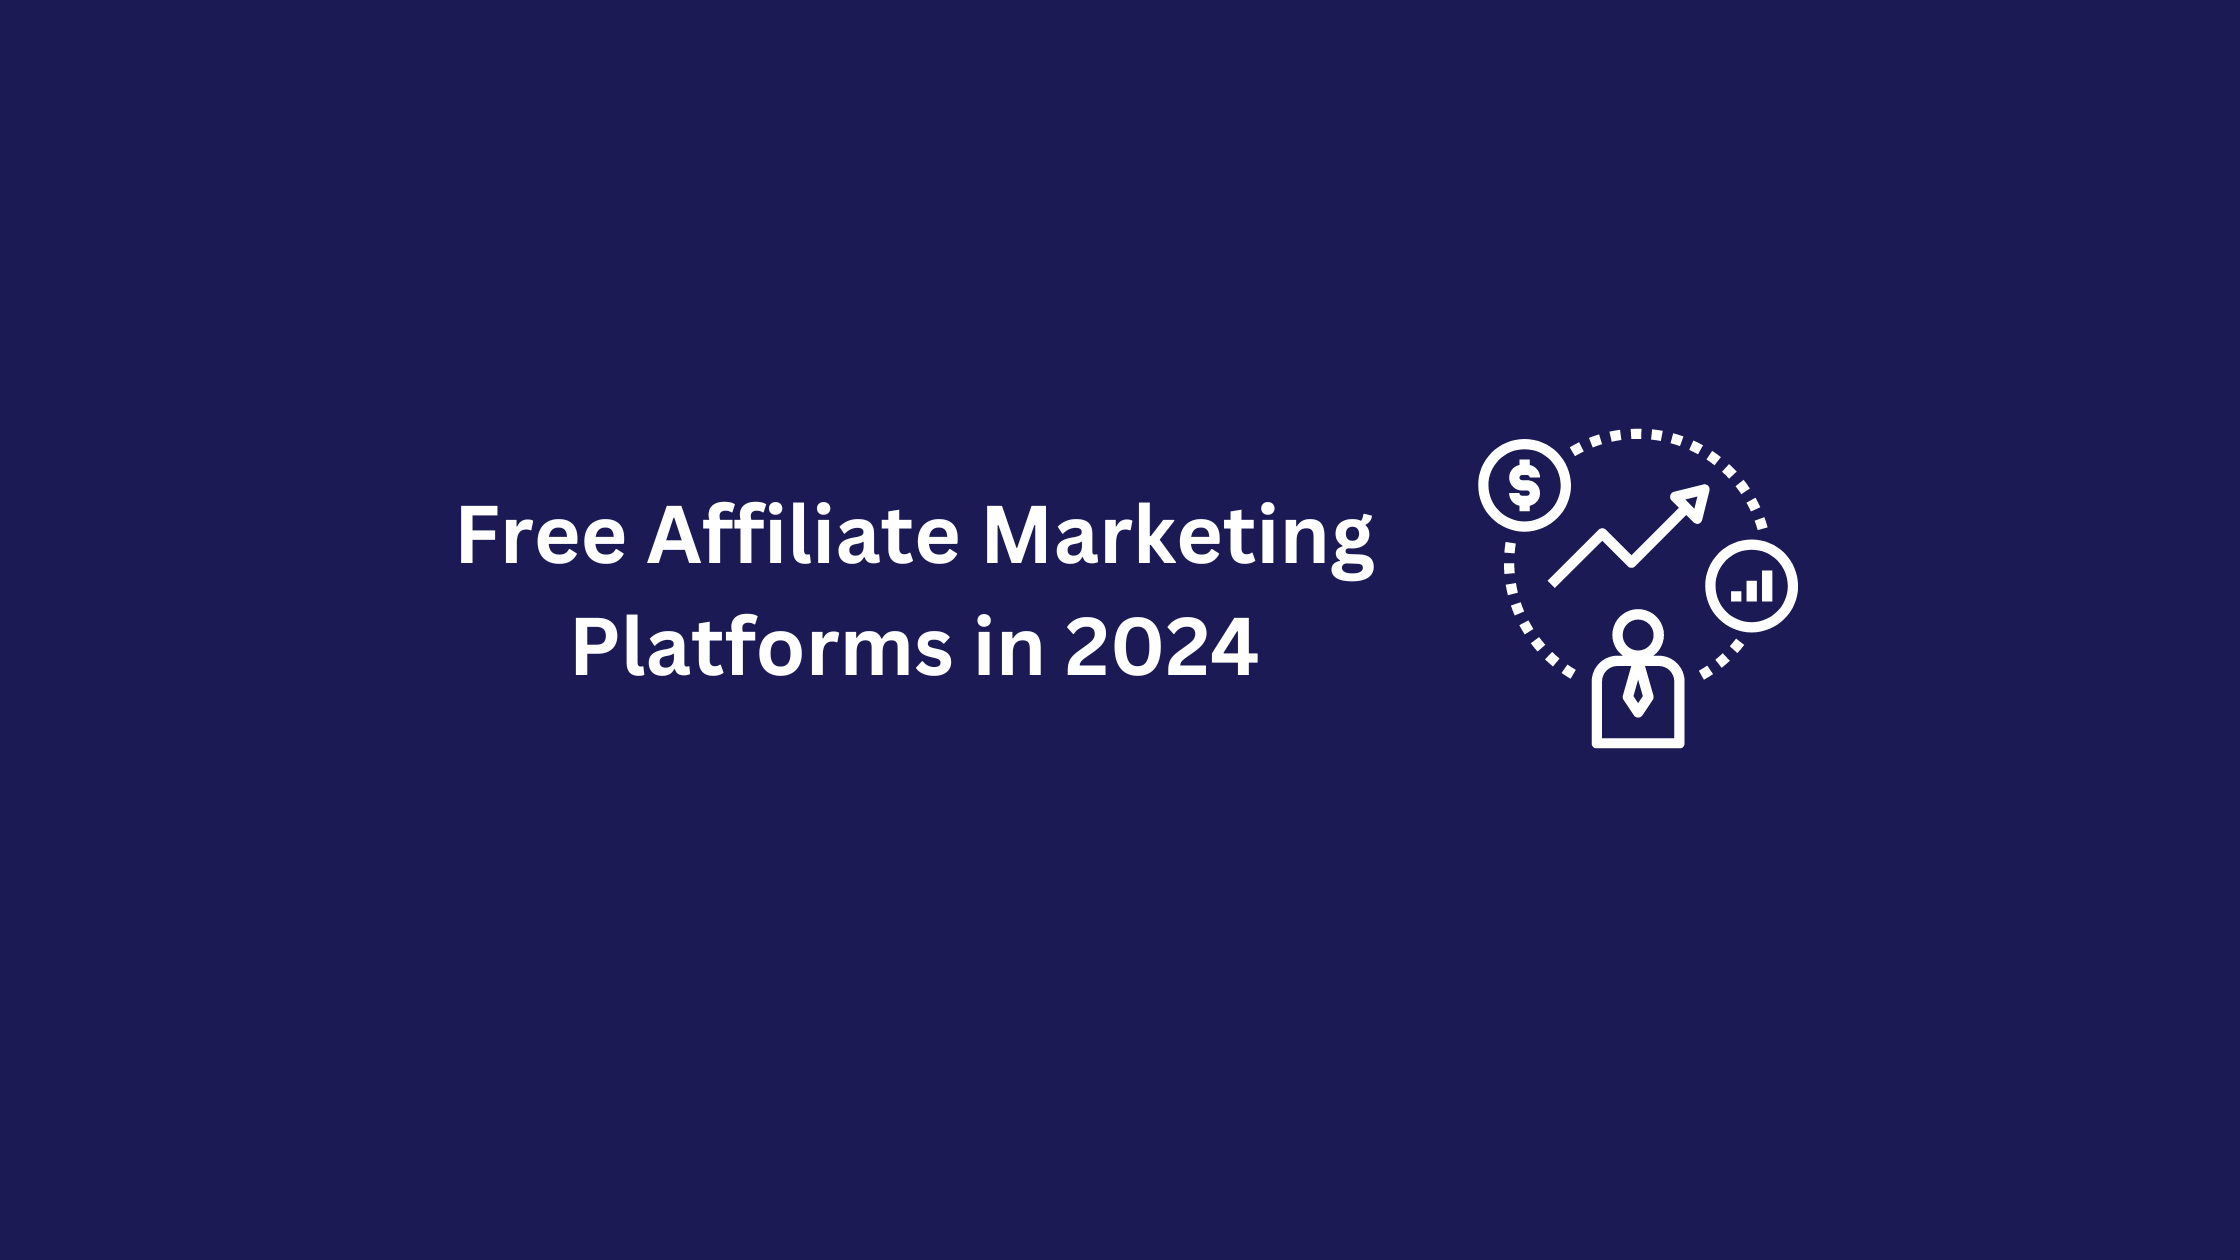 Free Affiliate Marketing Platforms in 2024